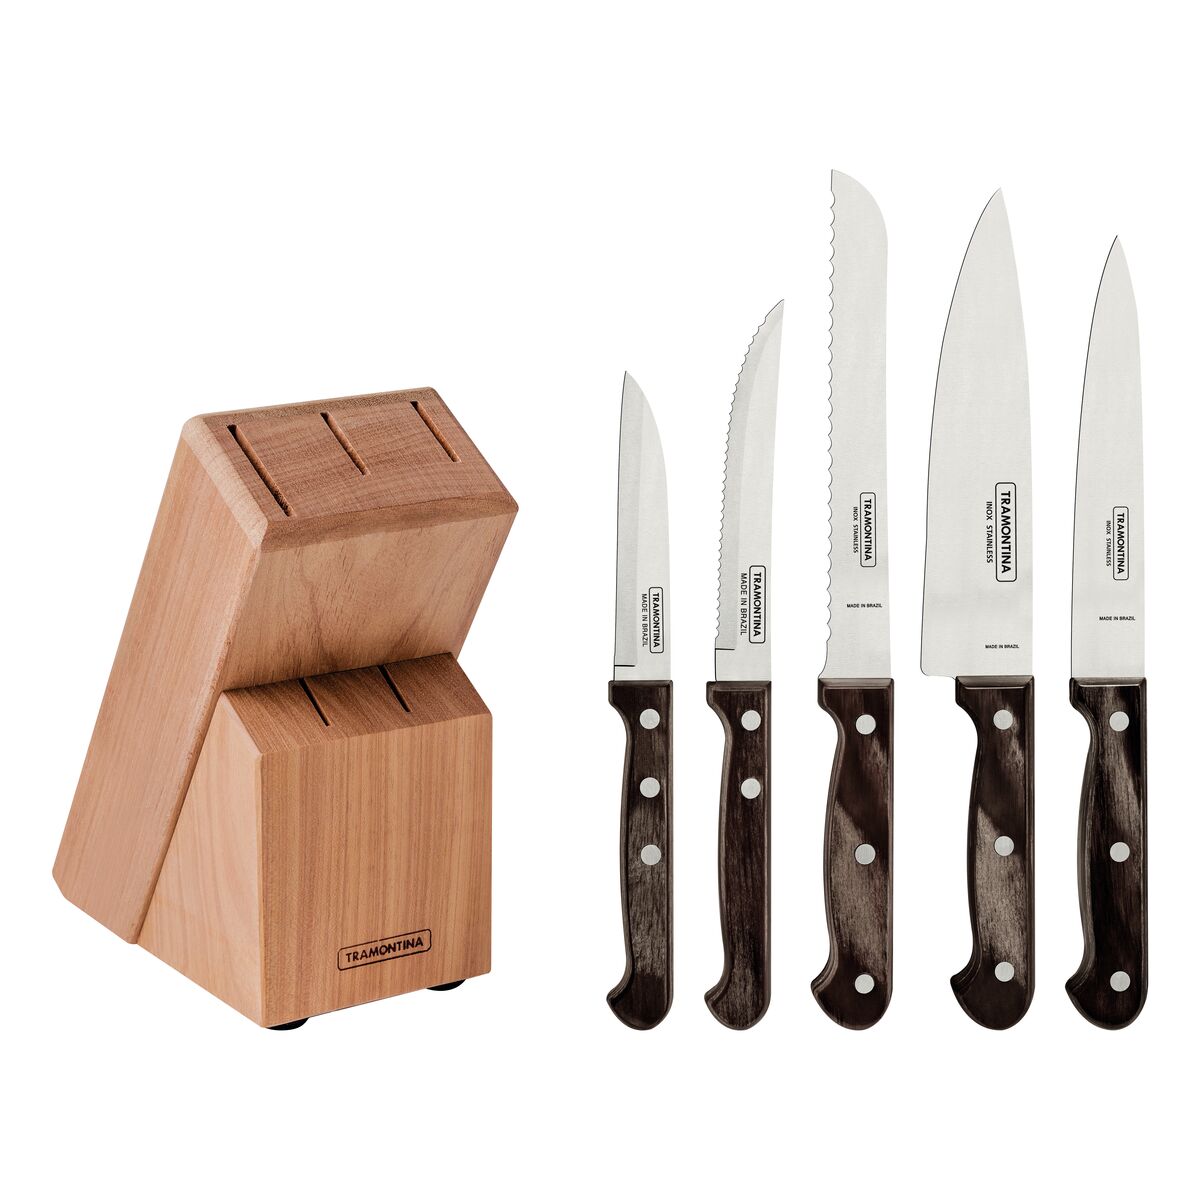 Tramontina 6-Piece Knife Set with Wood Block